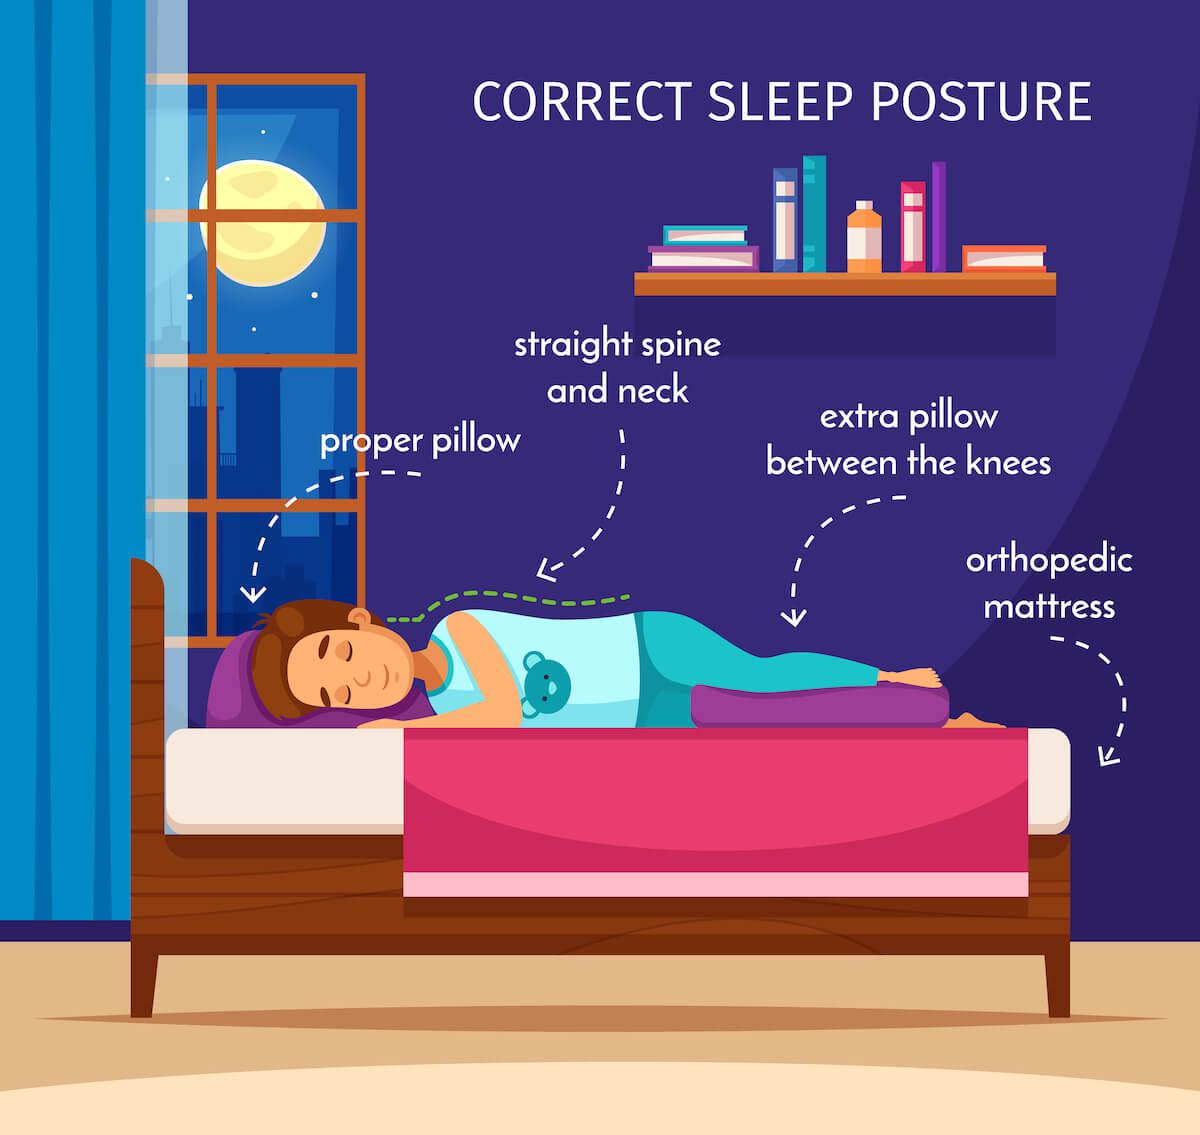 Correct Sleeping Posture (source: Freepik)